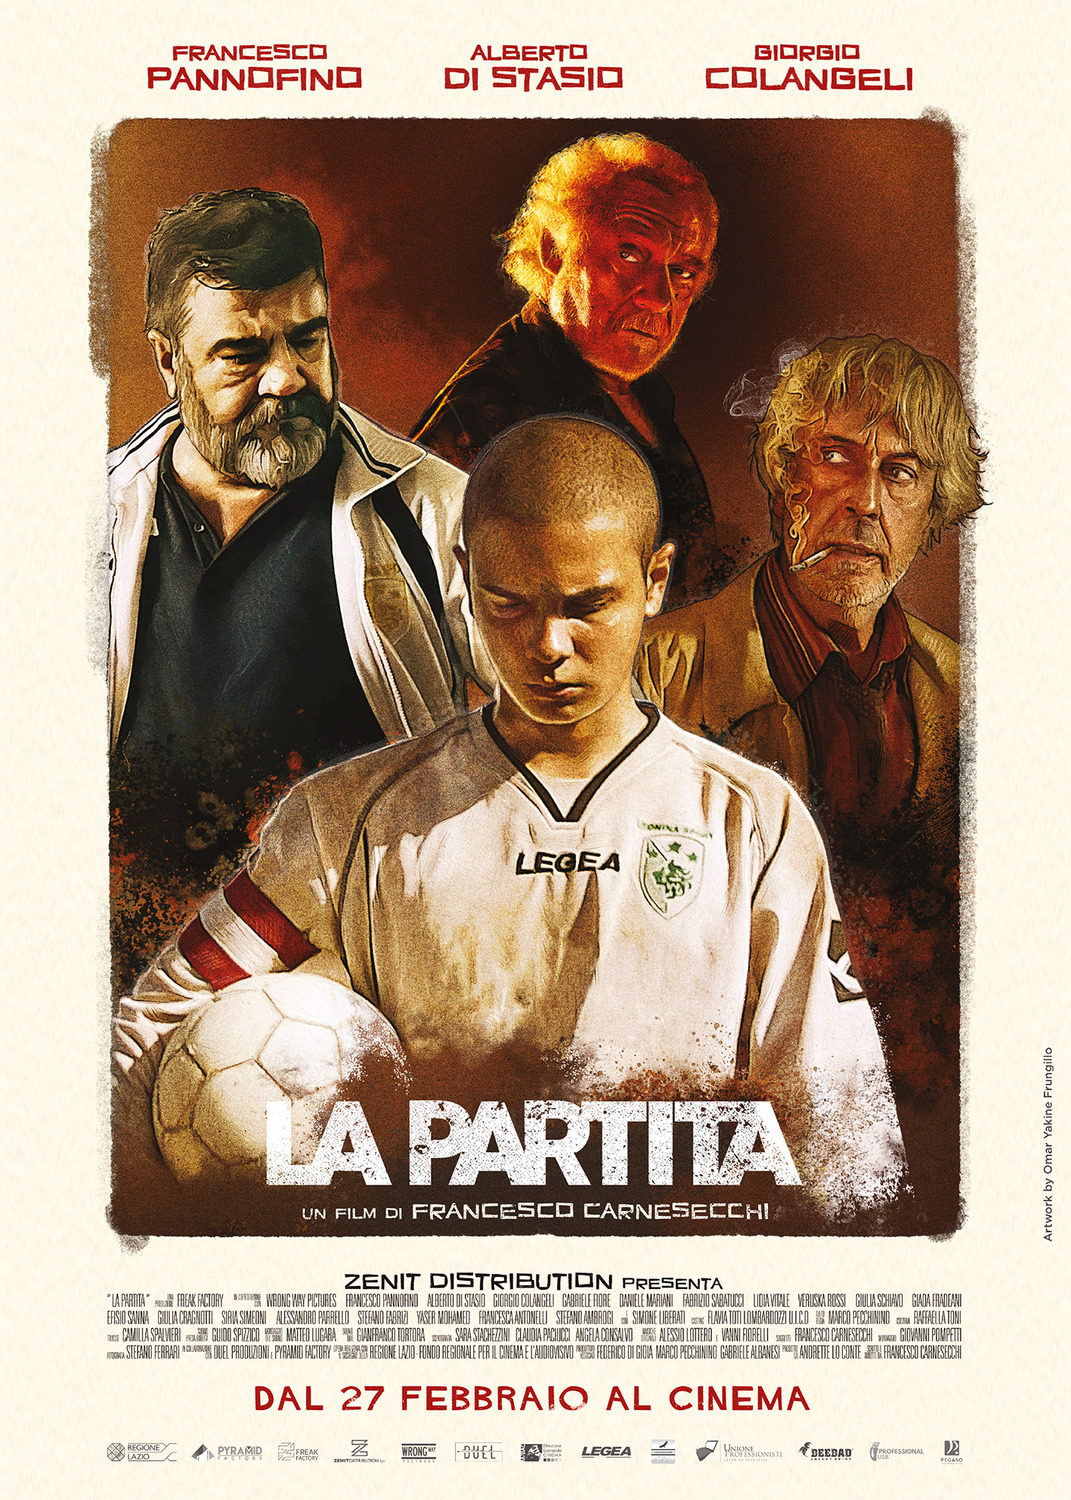 Extra Large Movie Poster Image for La partita 